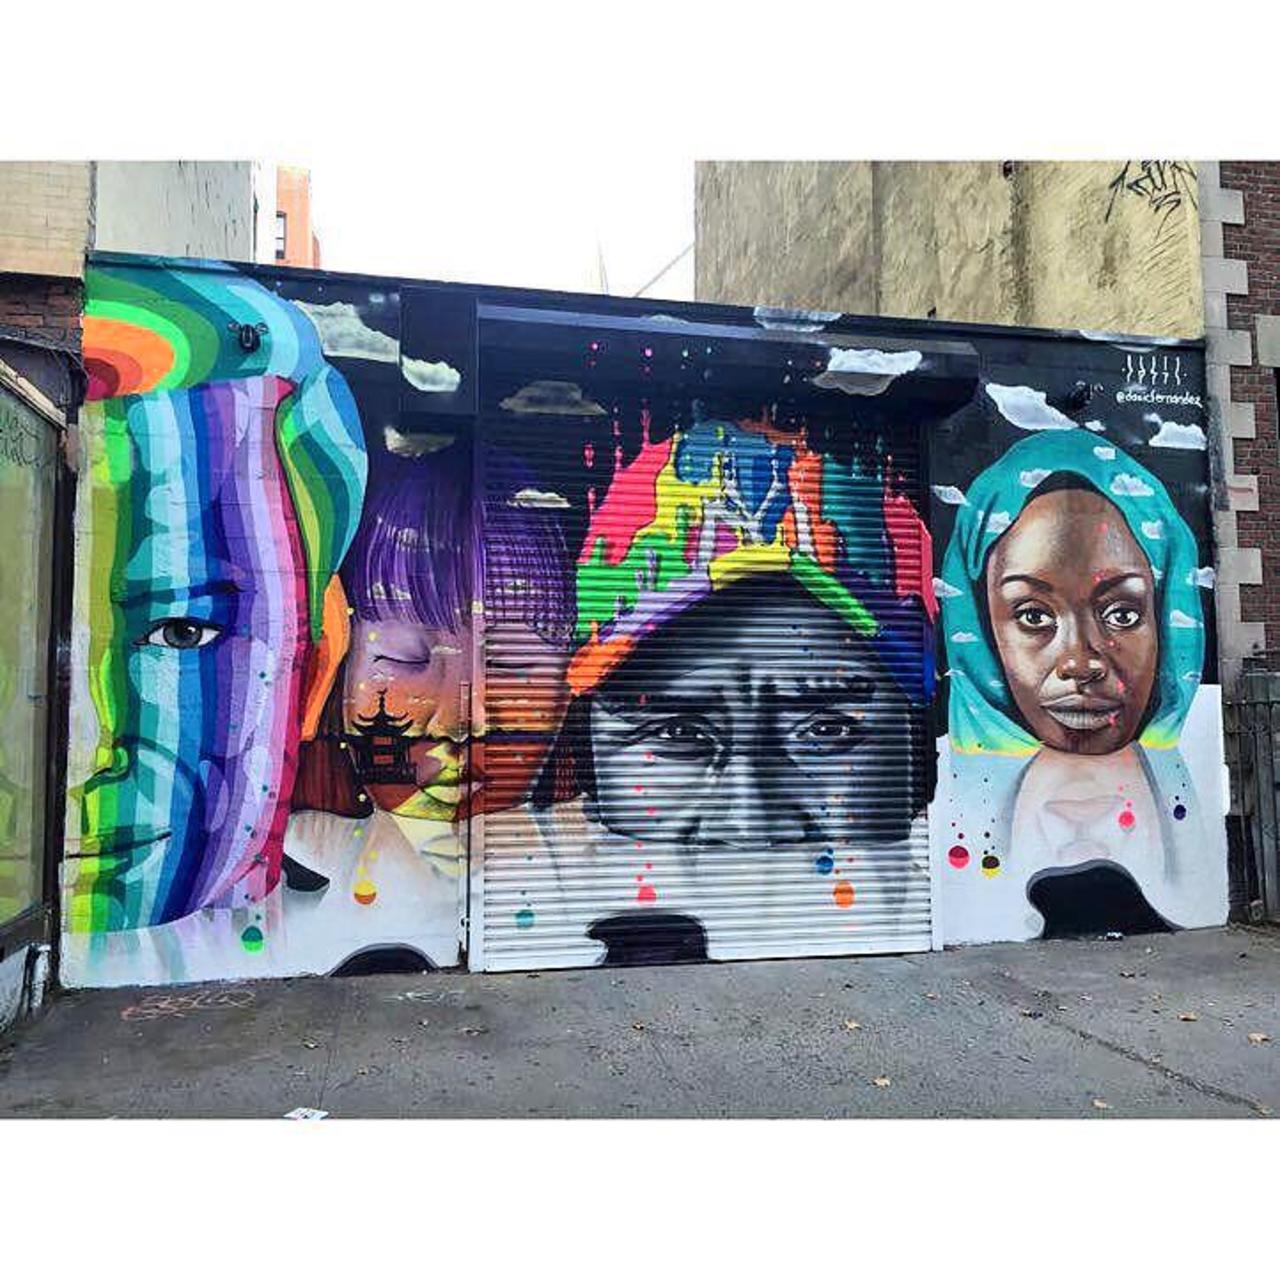 MT @circumjacent: #NewYorkCity #graffiti photo by @j2mz https://instagram.com/p/80Z_YjMC4r/ #StreetArt http://t.co/lJeedUN2Z2